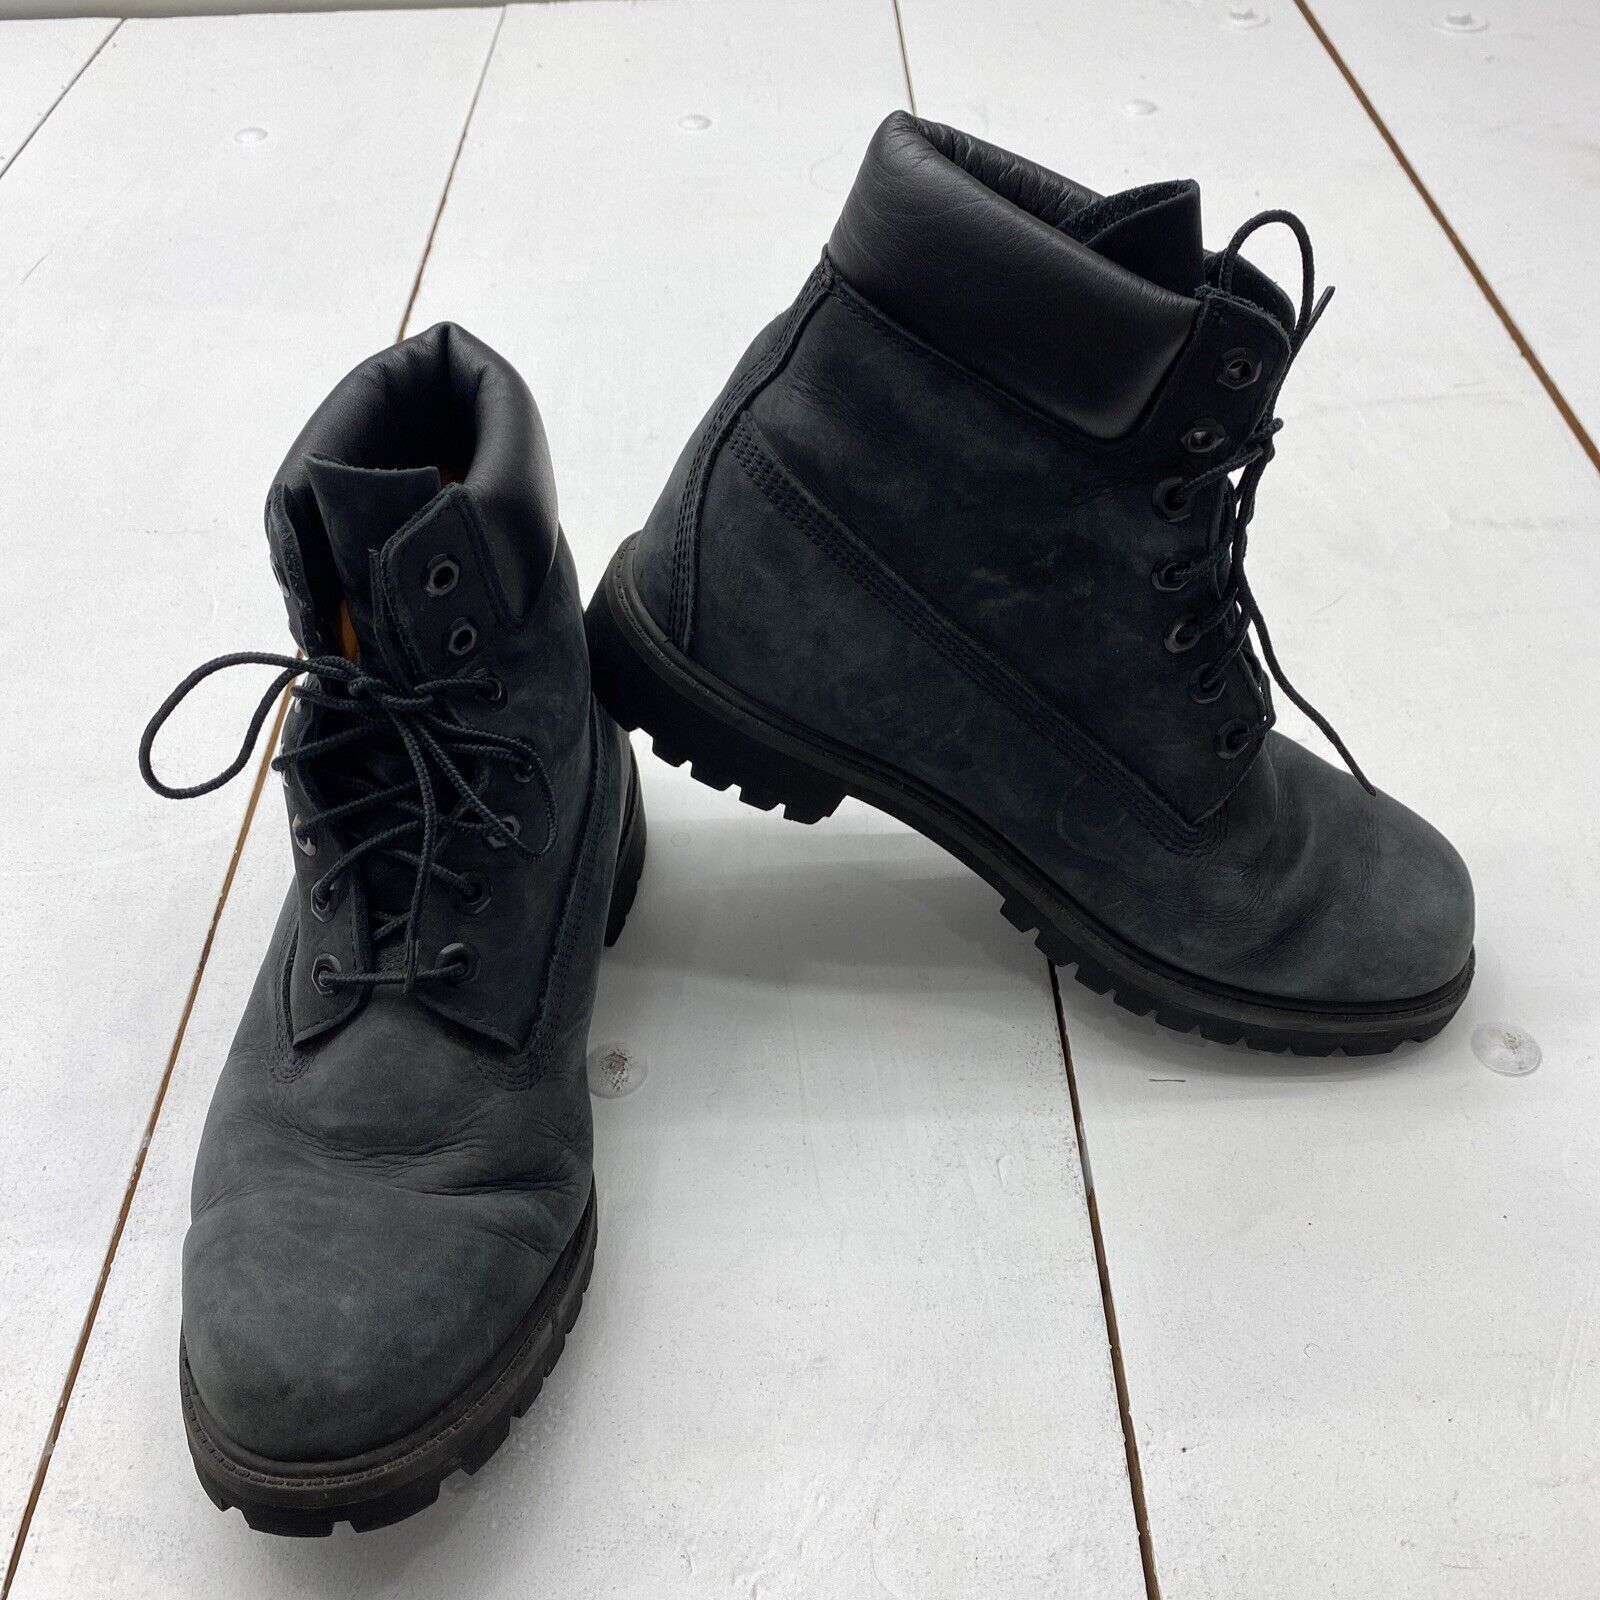 Timberland Boots 10073 Black Premium Nubuck Leather Waterproof Mens Size 10*